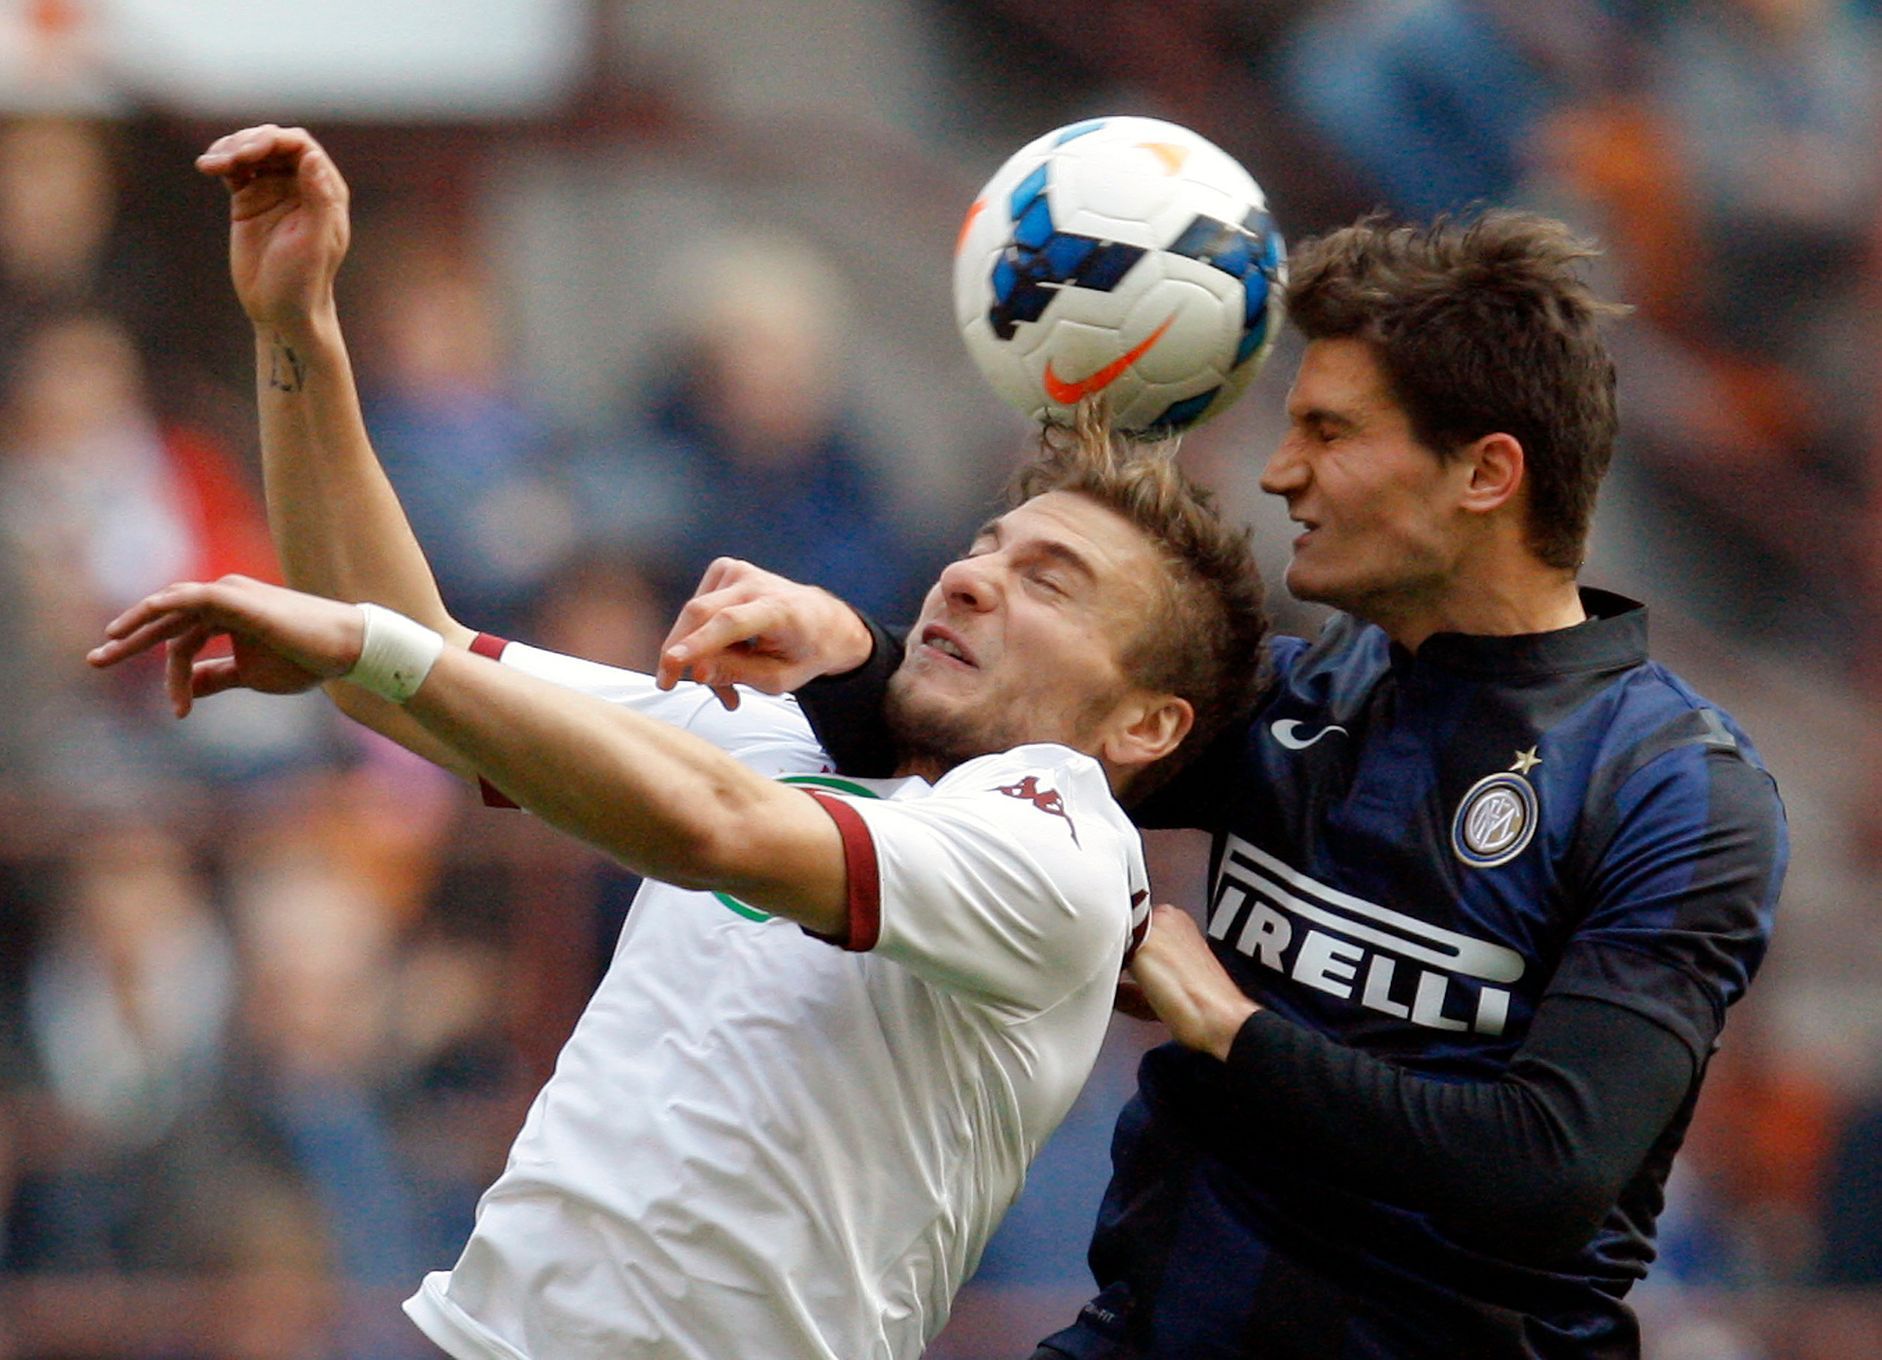 Inter Milan (Andreolli) vs FC Turín (Immobile)